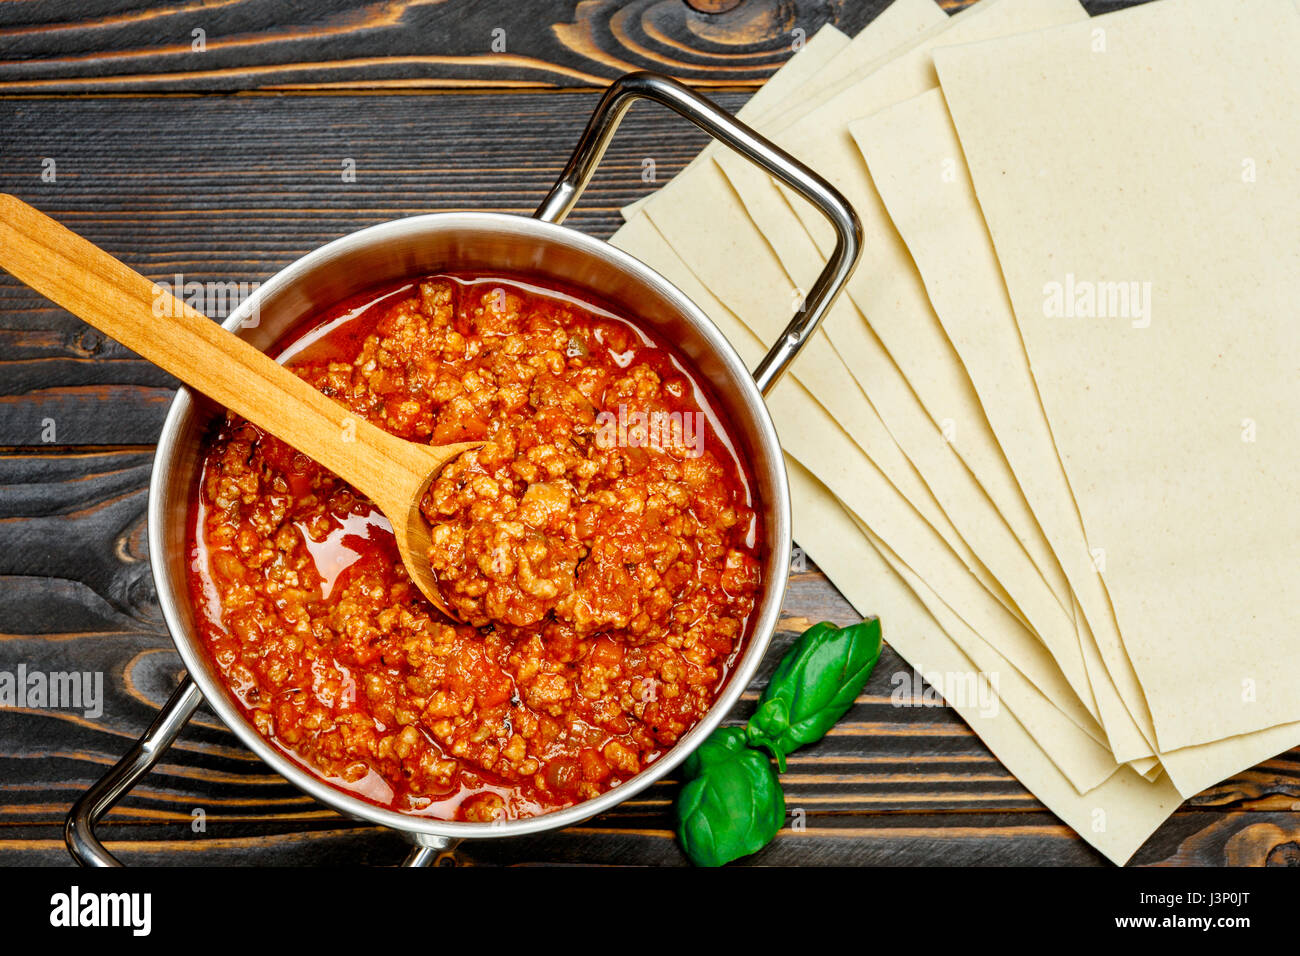 Spaghetti bolognese sauce and lasagna sheets Stock Photo